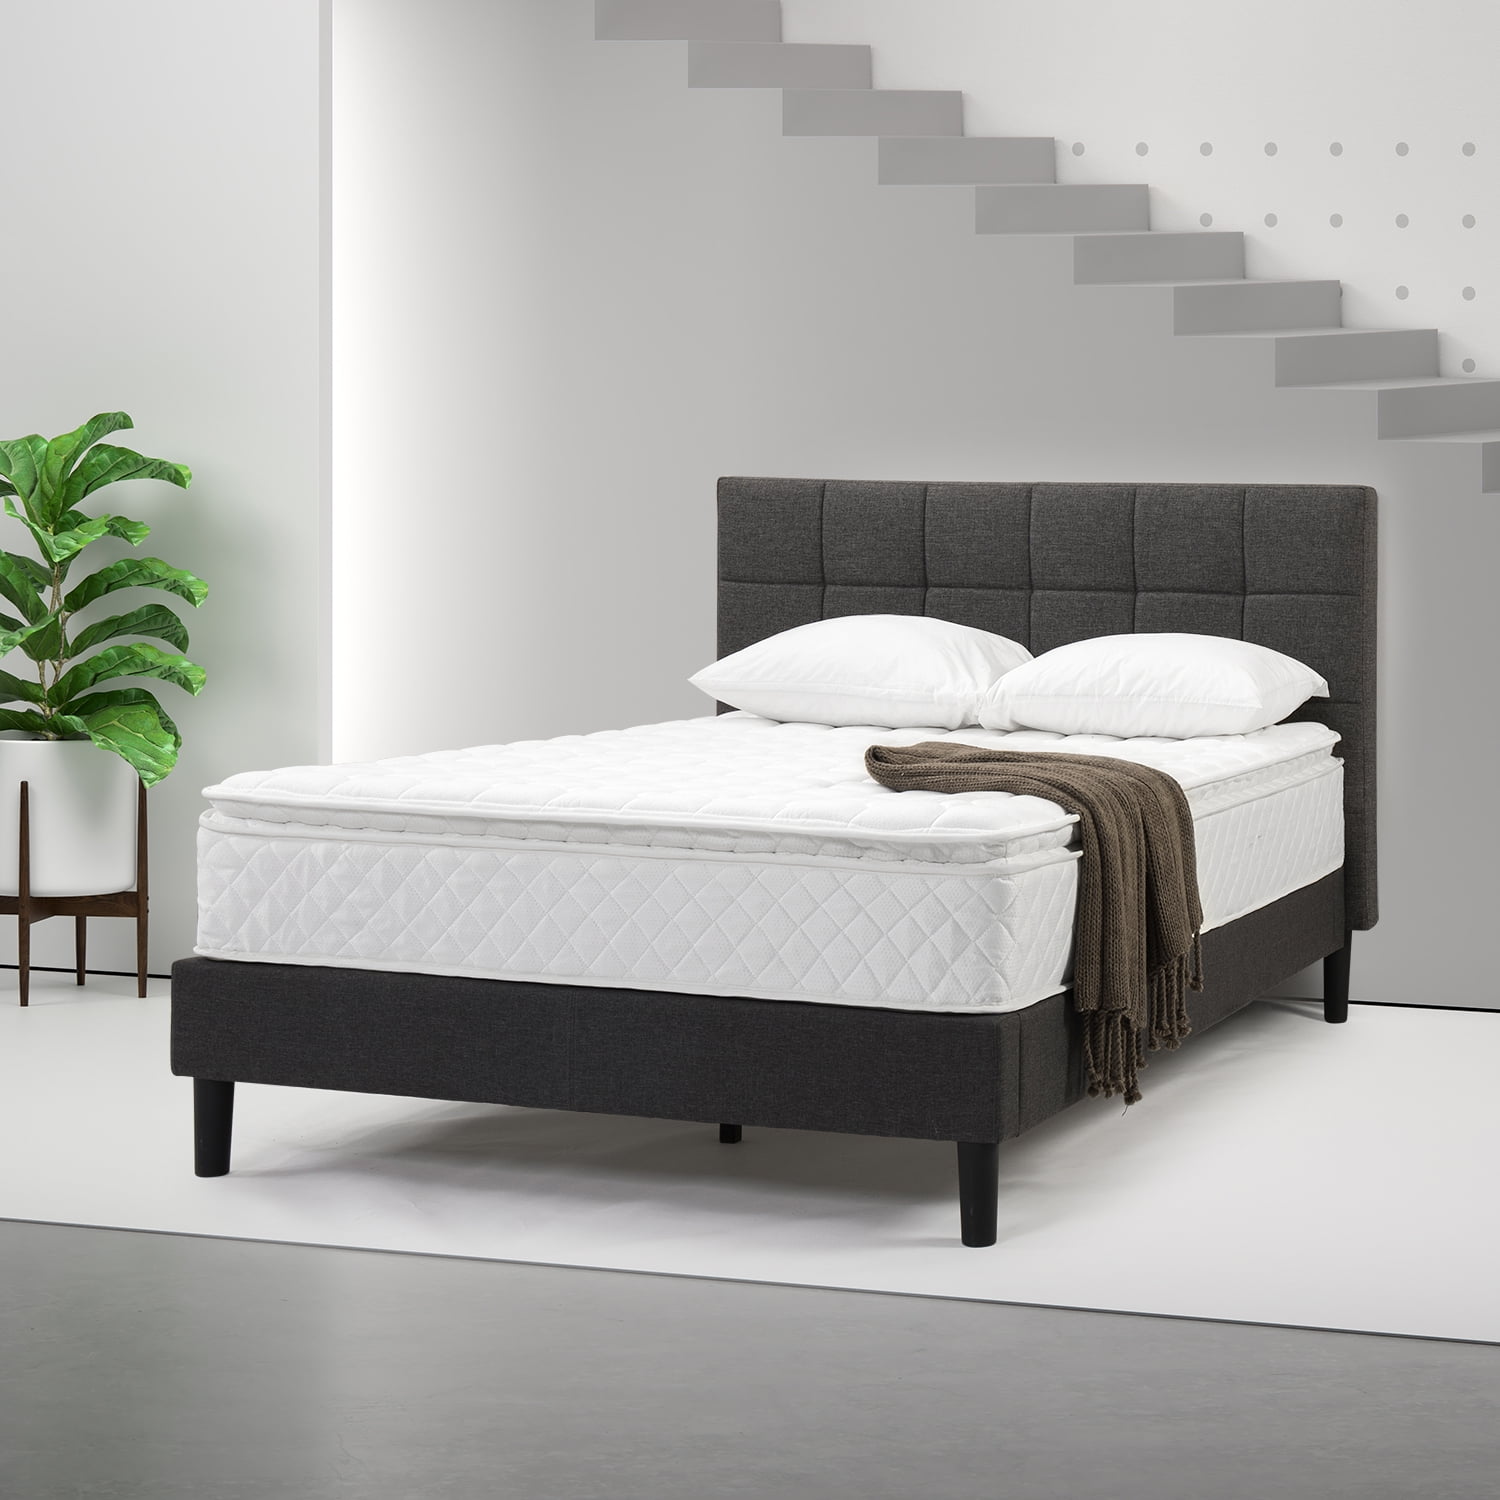 Slumber 1 W-BLBN-600D 6 inch Twin Size Bed Spring Mattress for sale online 